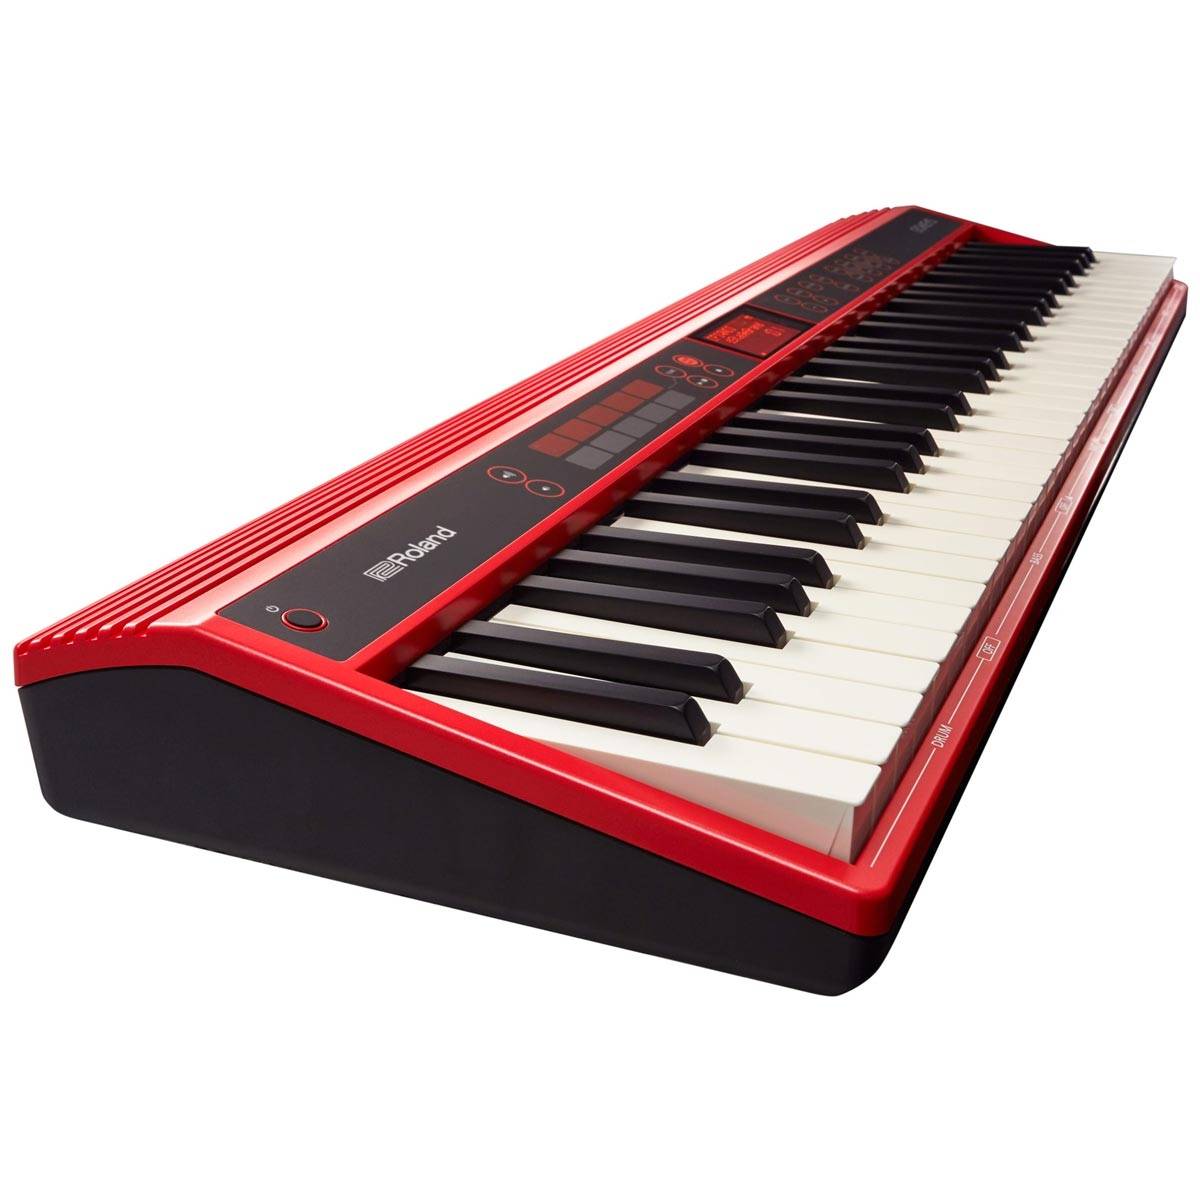 Roland GO:KEYS Portable Digital piano